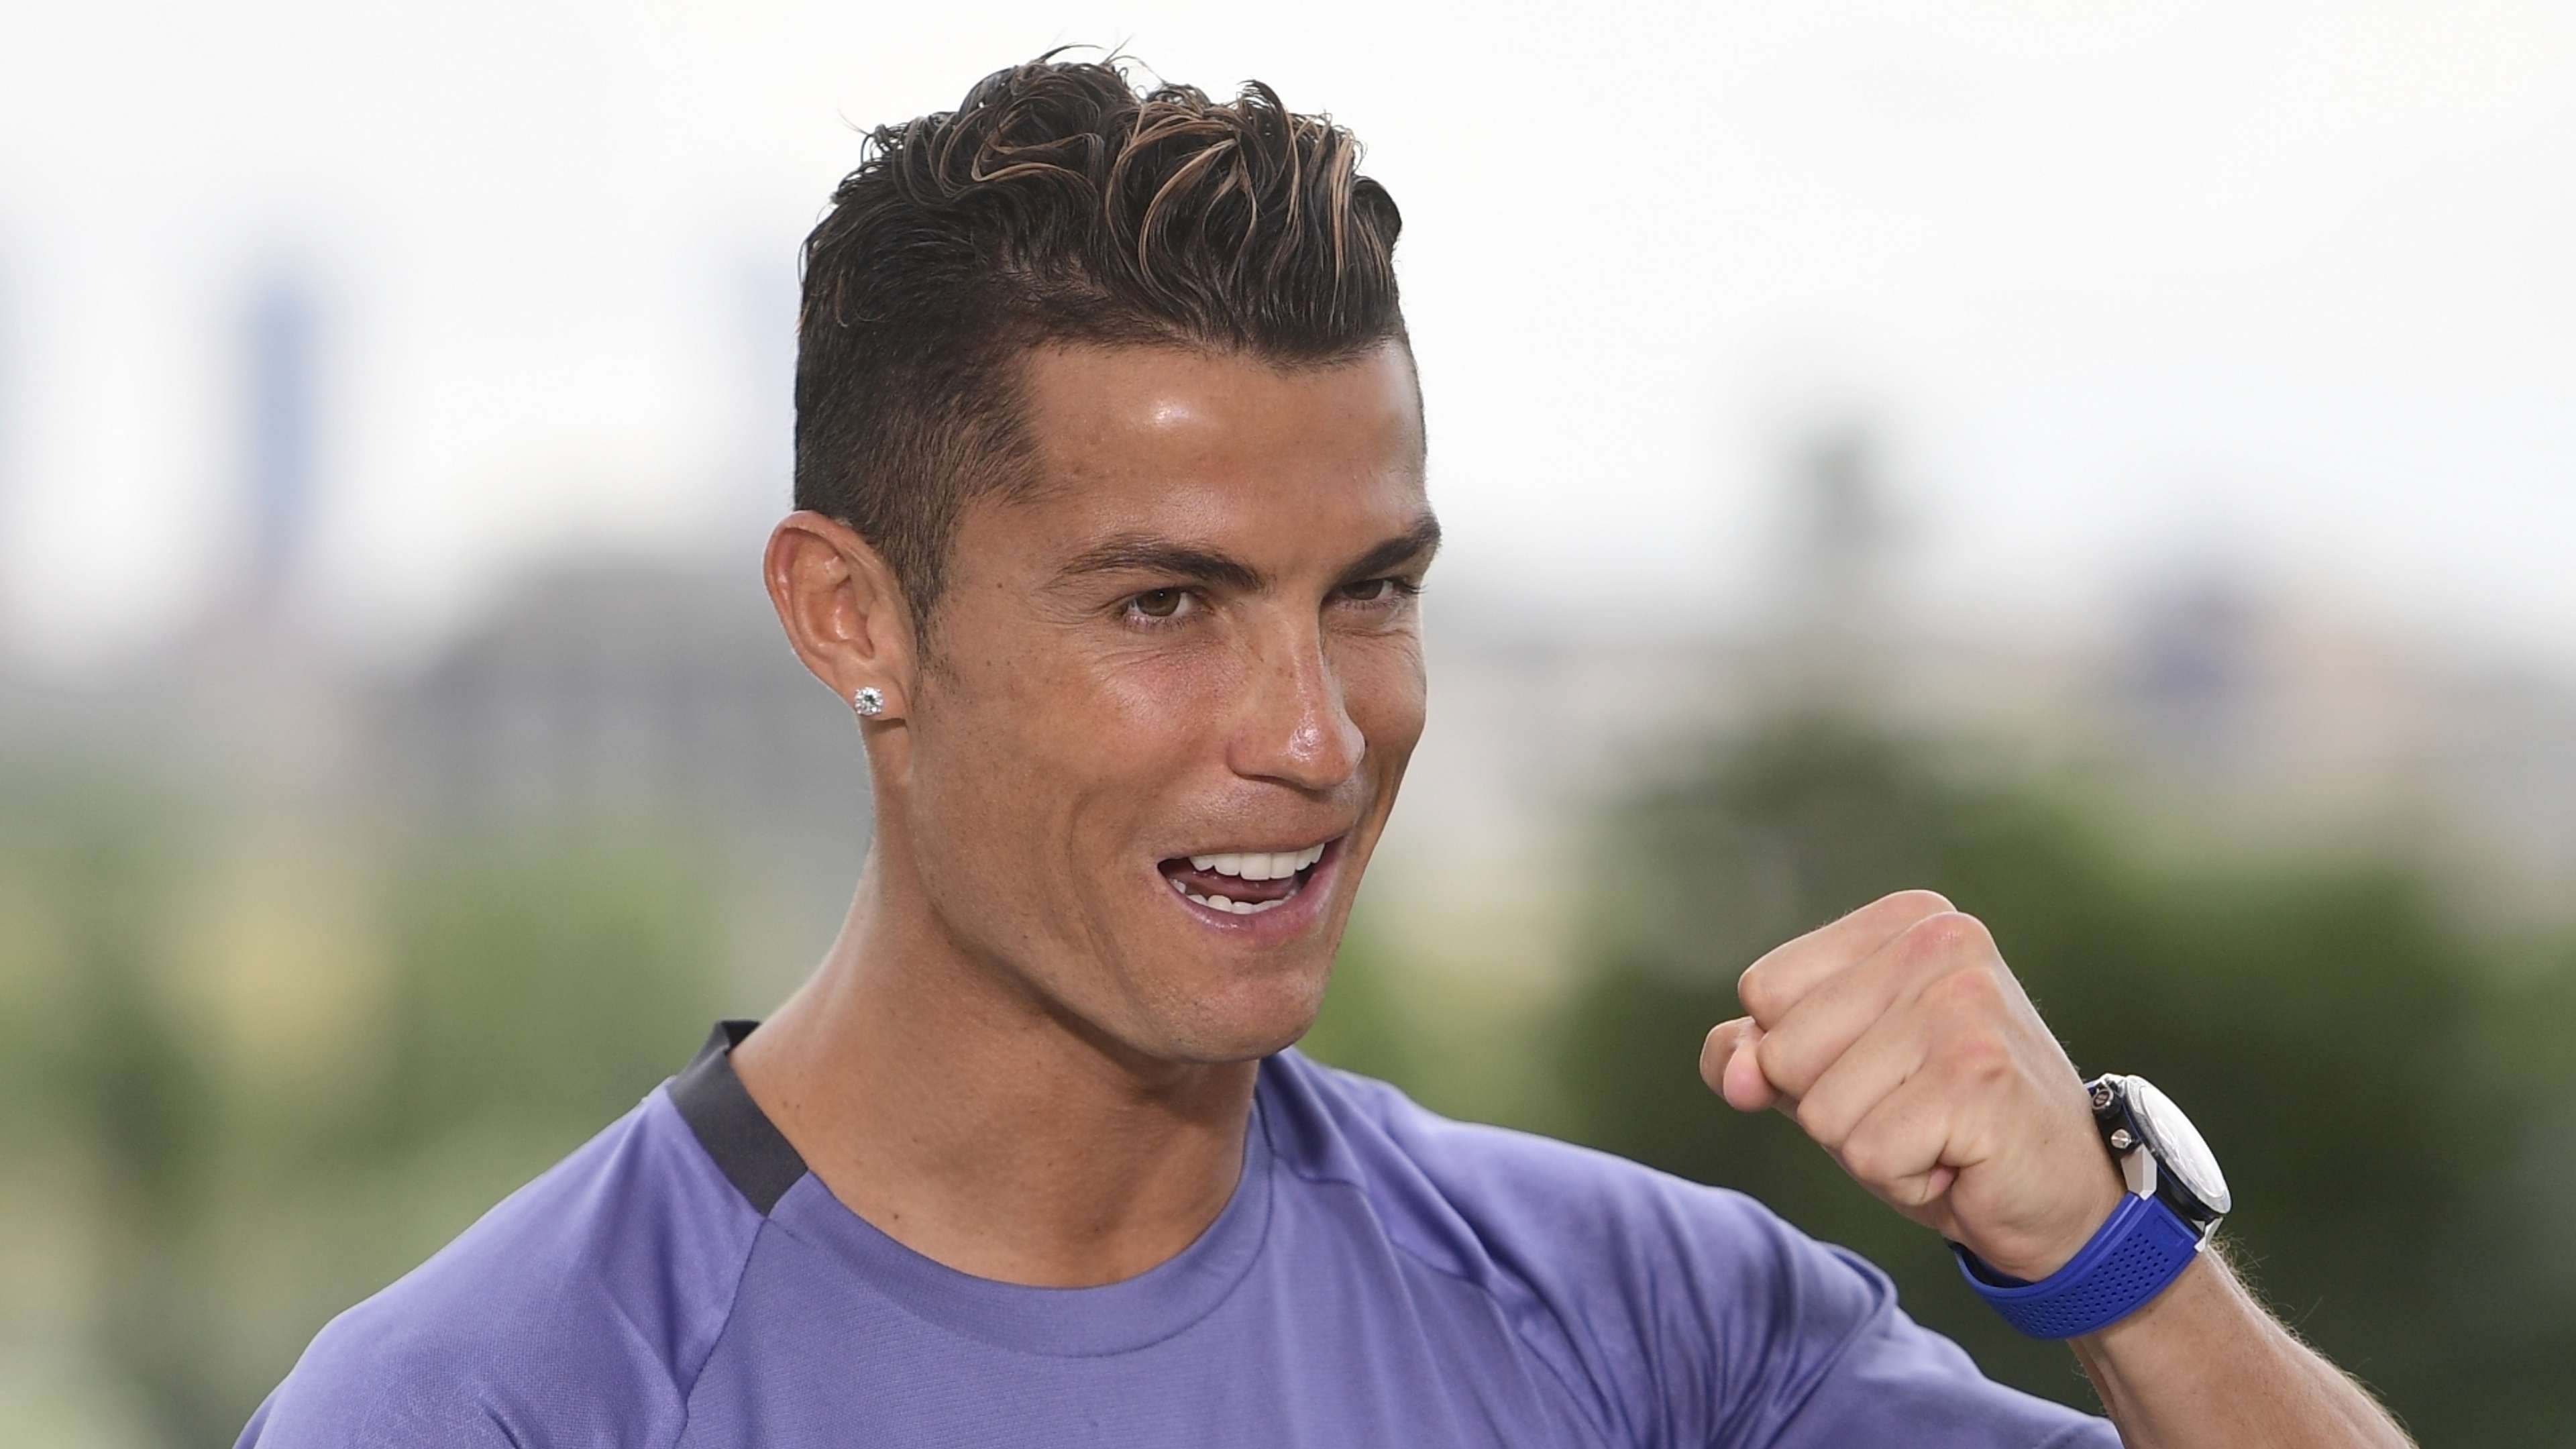 Cristiano Ronaldo hair